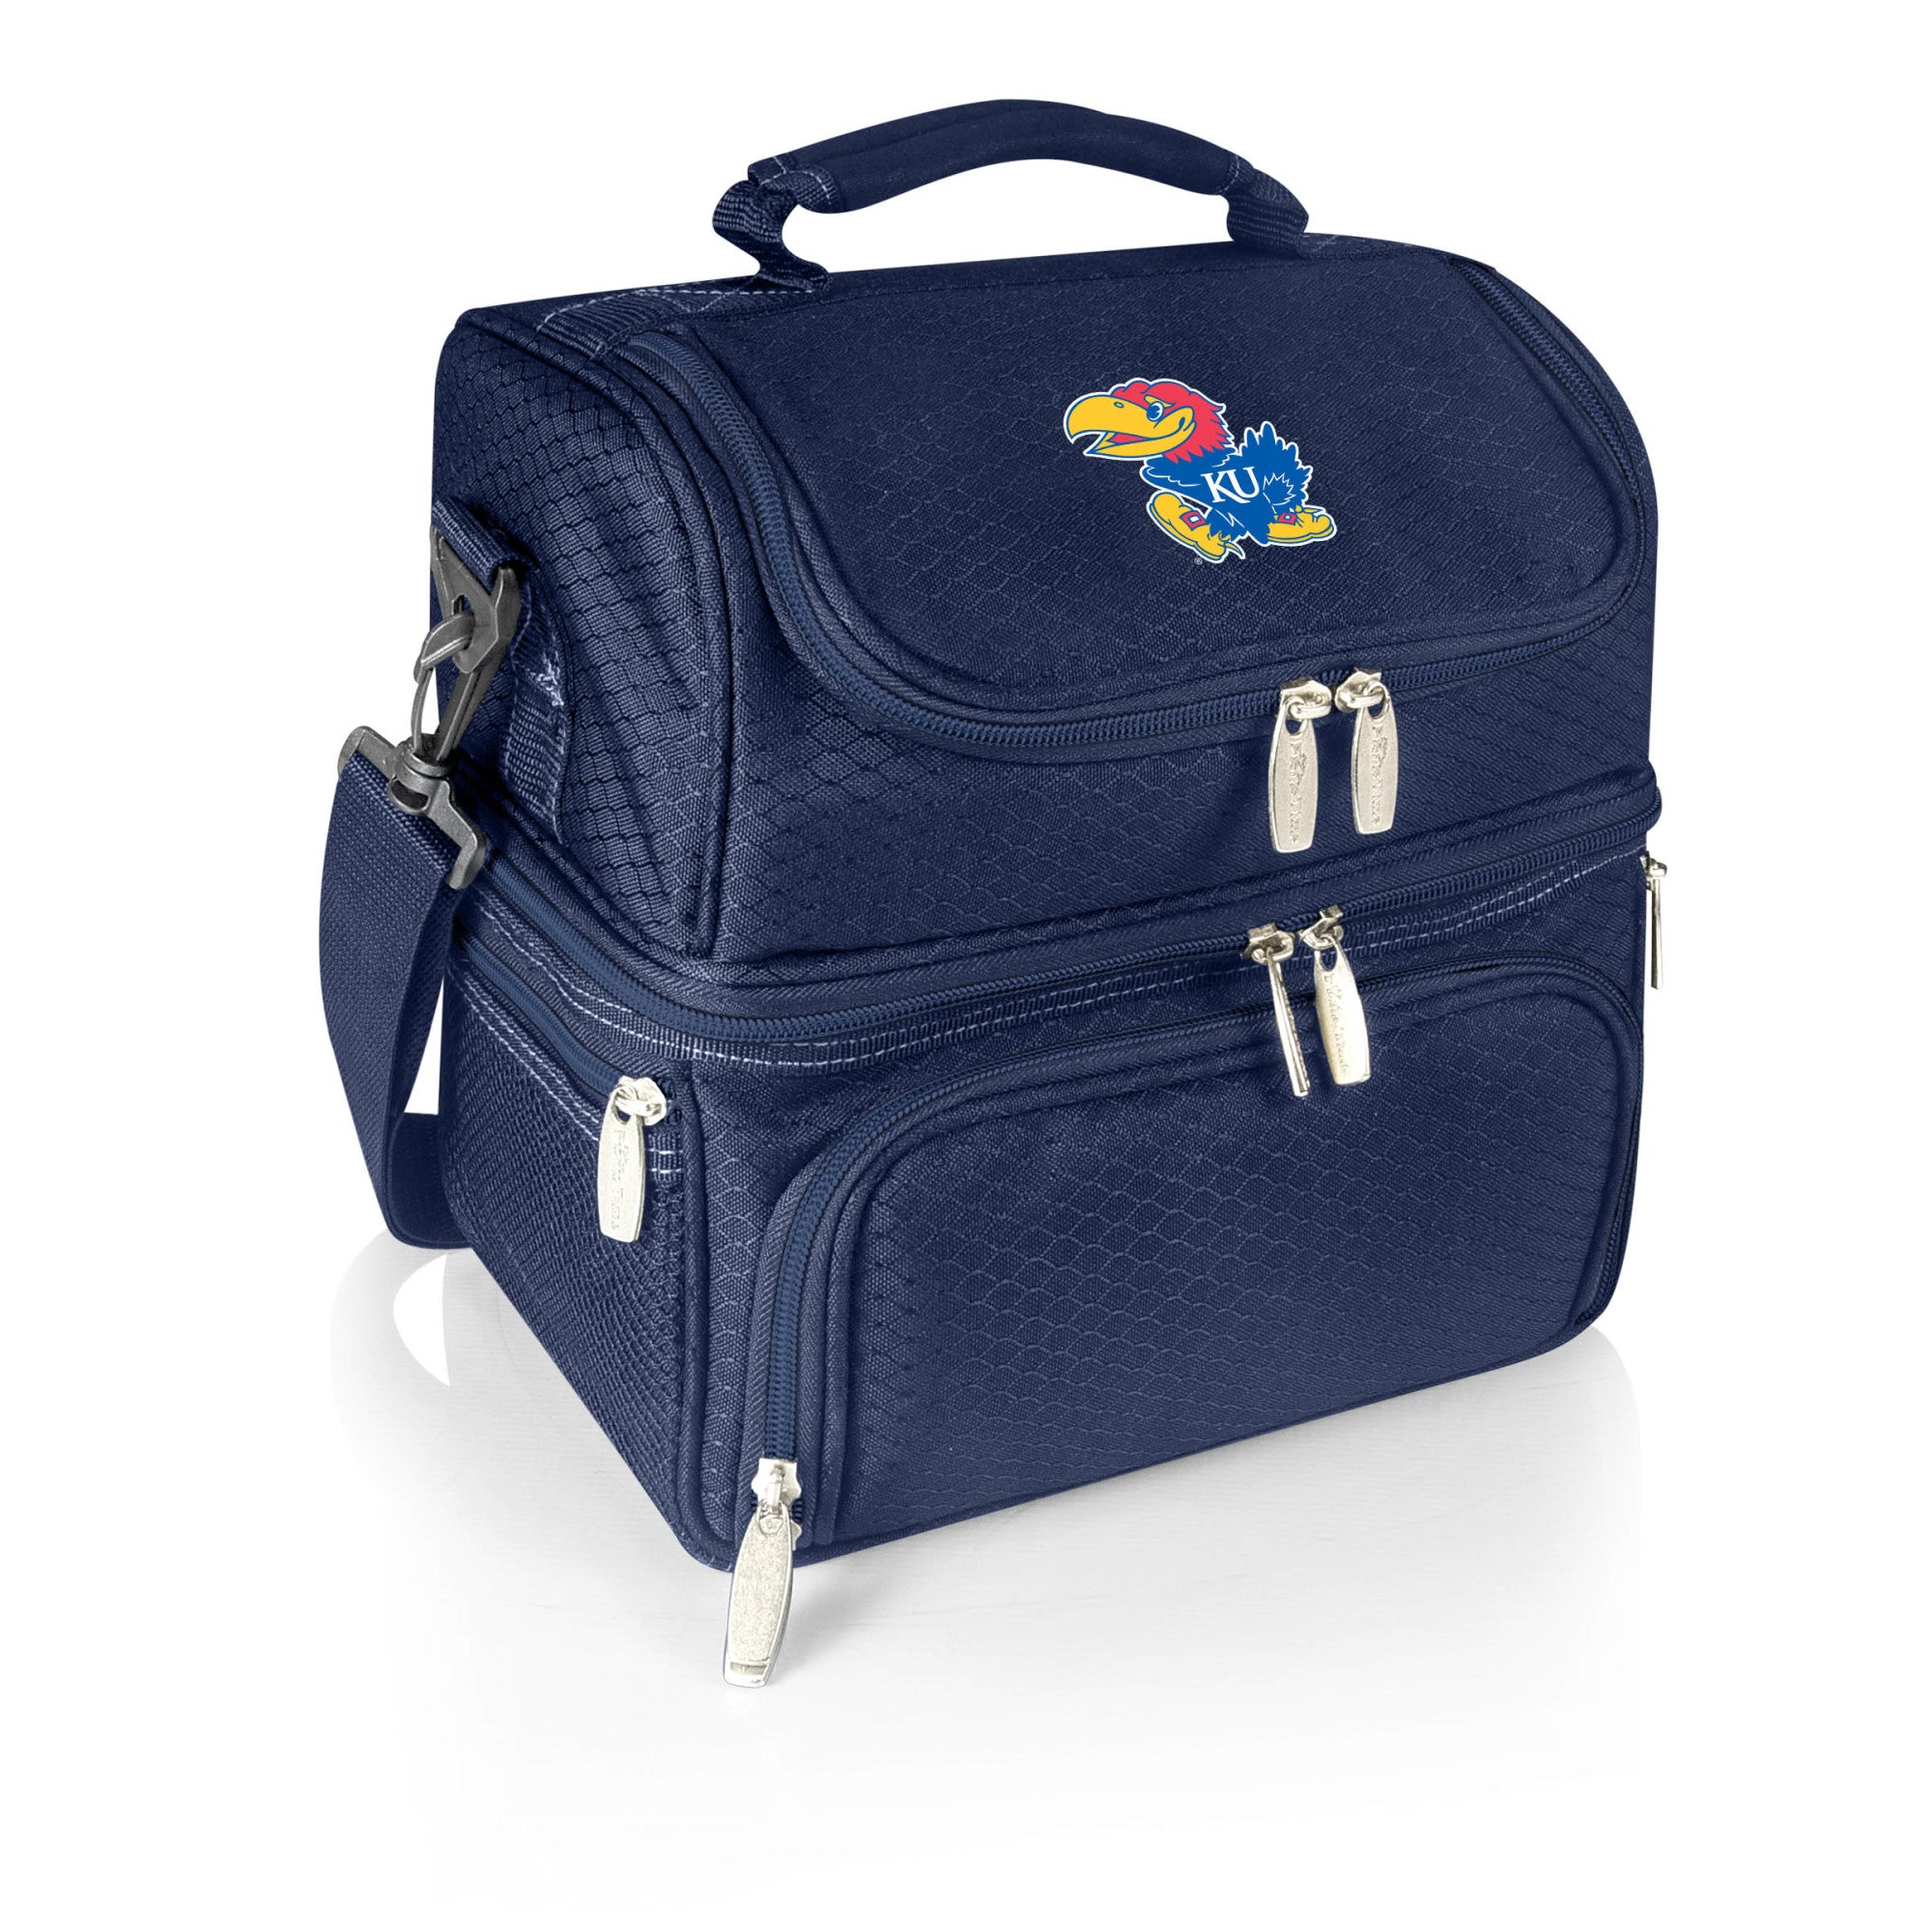 Kansas Jayhawks - Pranzo Lunch Bag Cooler with Utensils